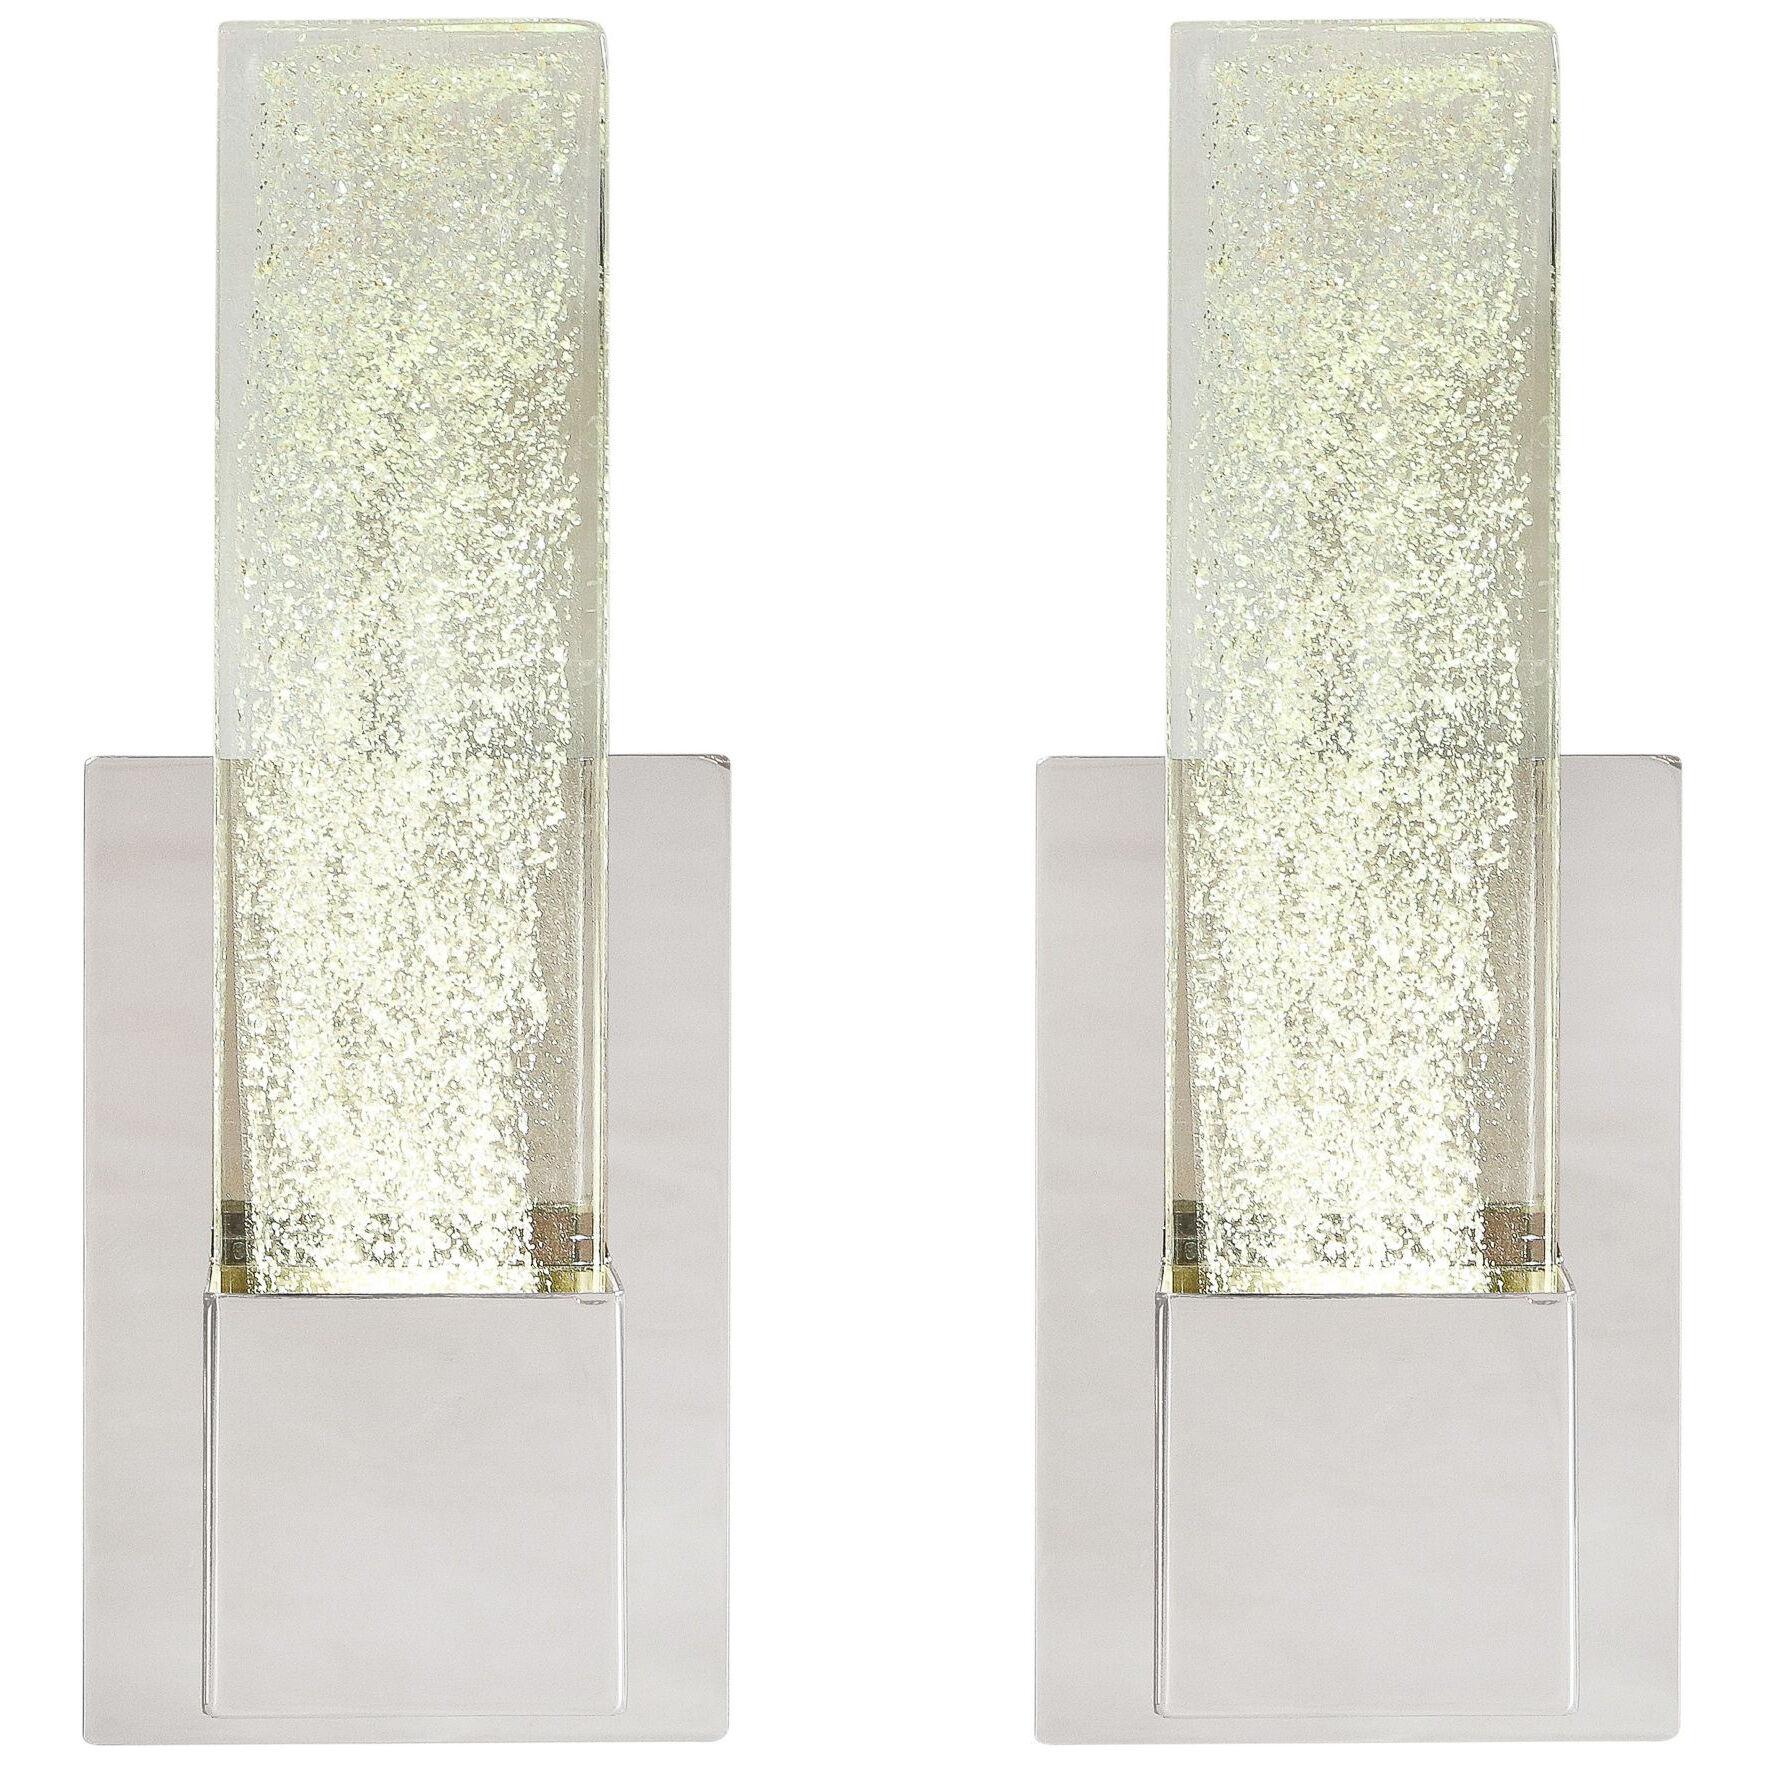 Pair of Handblown Murano Glass Sconces in Nickel w/ 24-karat Gold Flecks